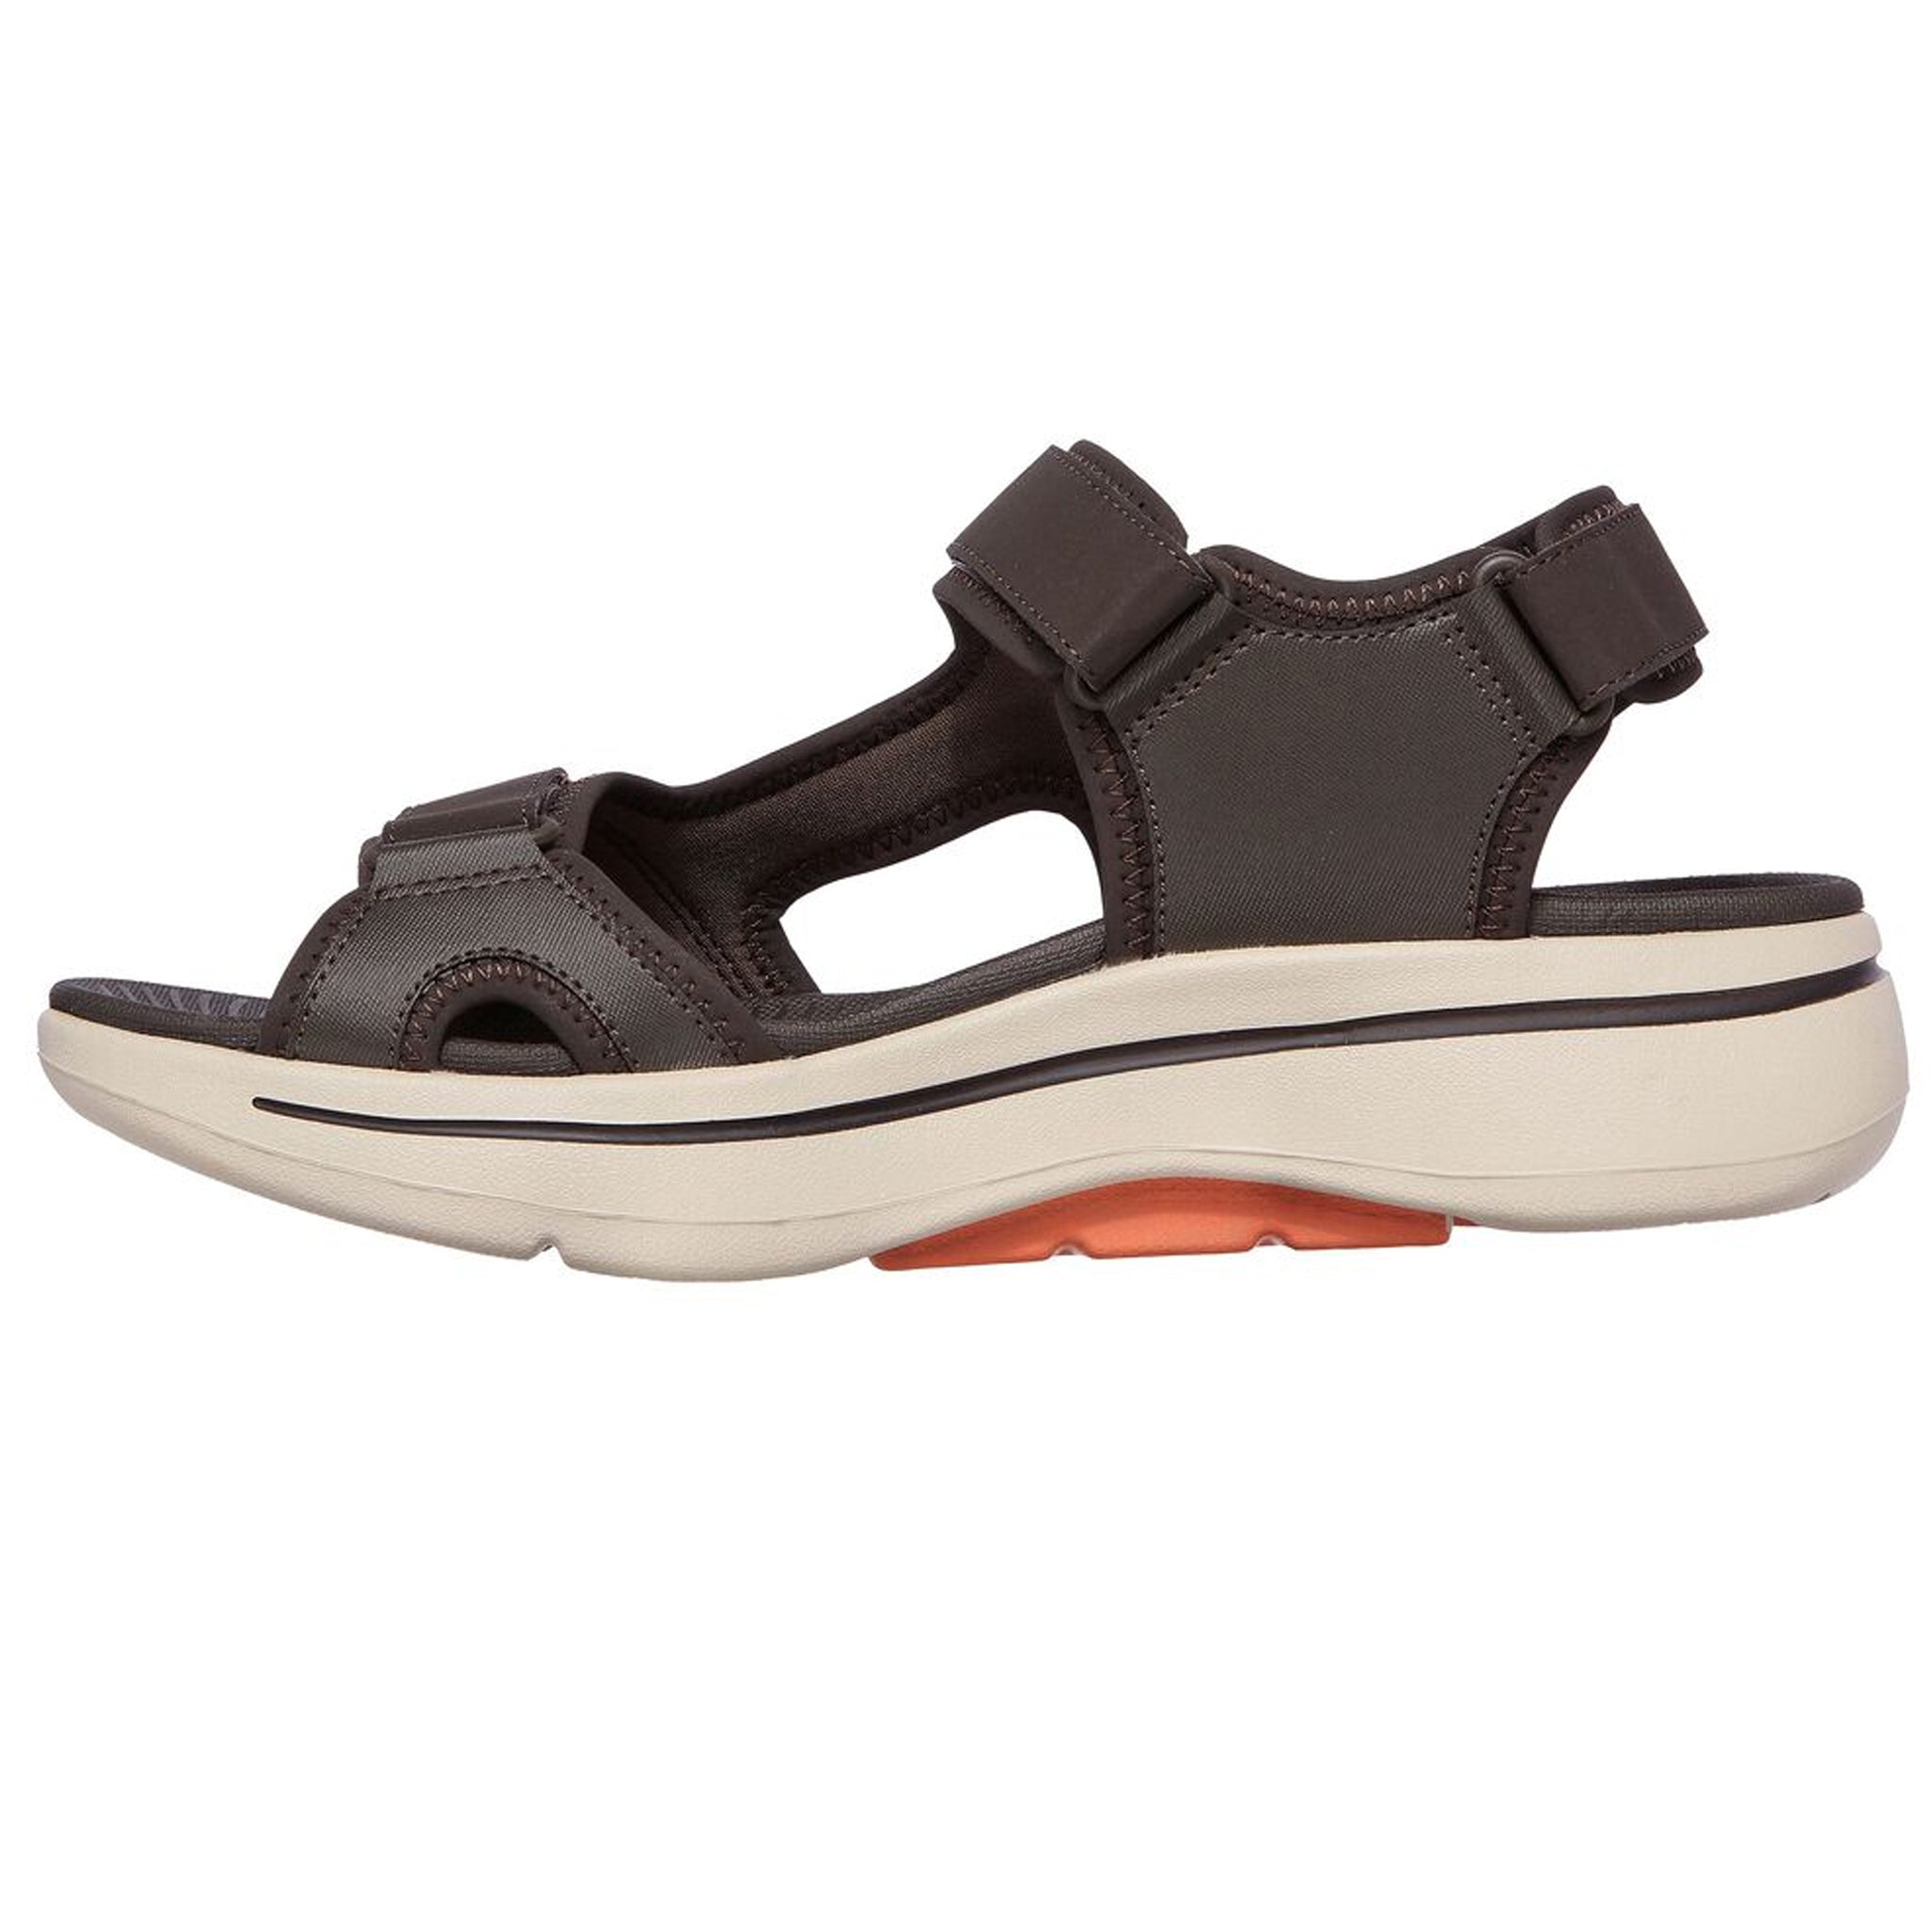 Skechers Men's 229021 Go Walk Arch Fit Sandal Mission Strap Sandals – Shoe Store and More